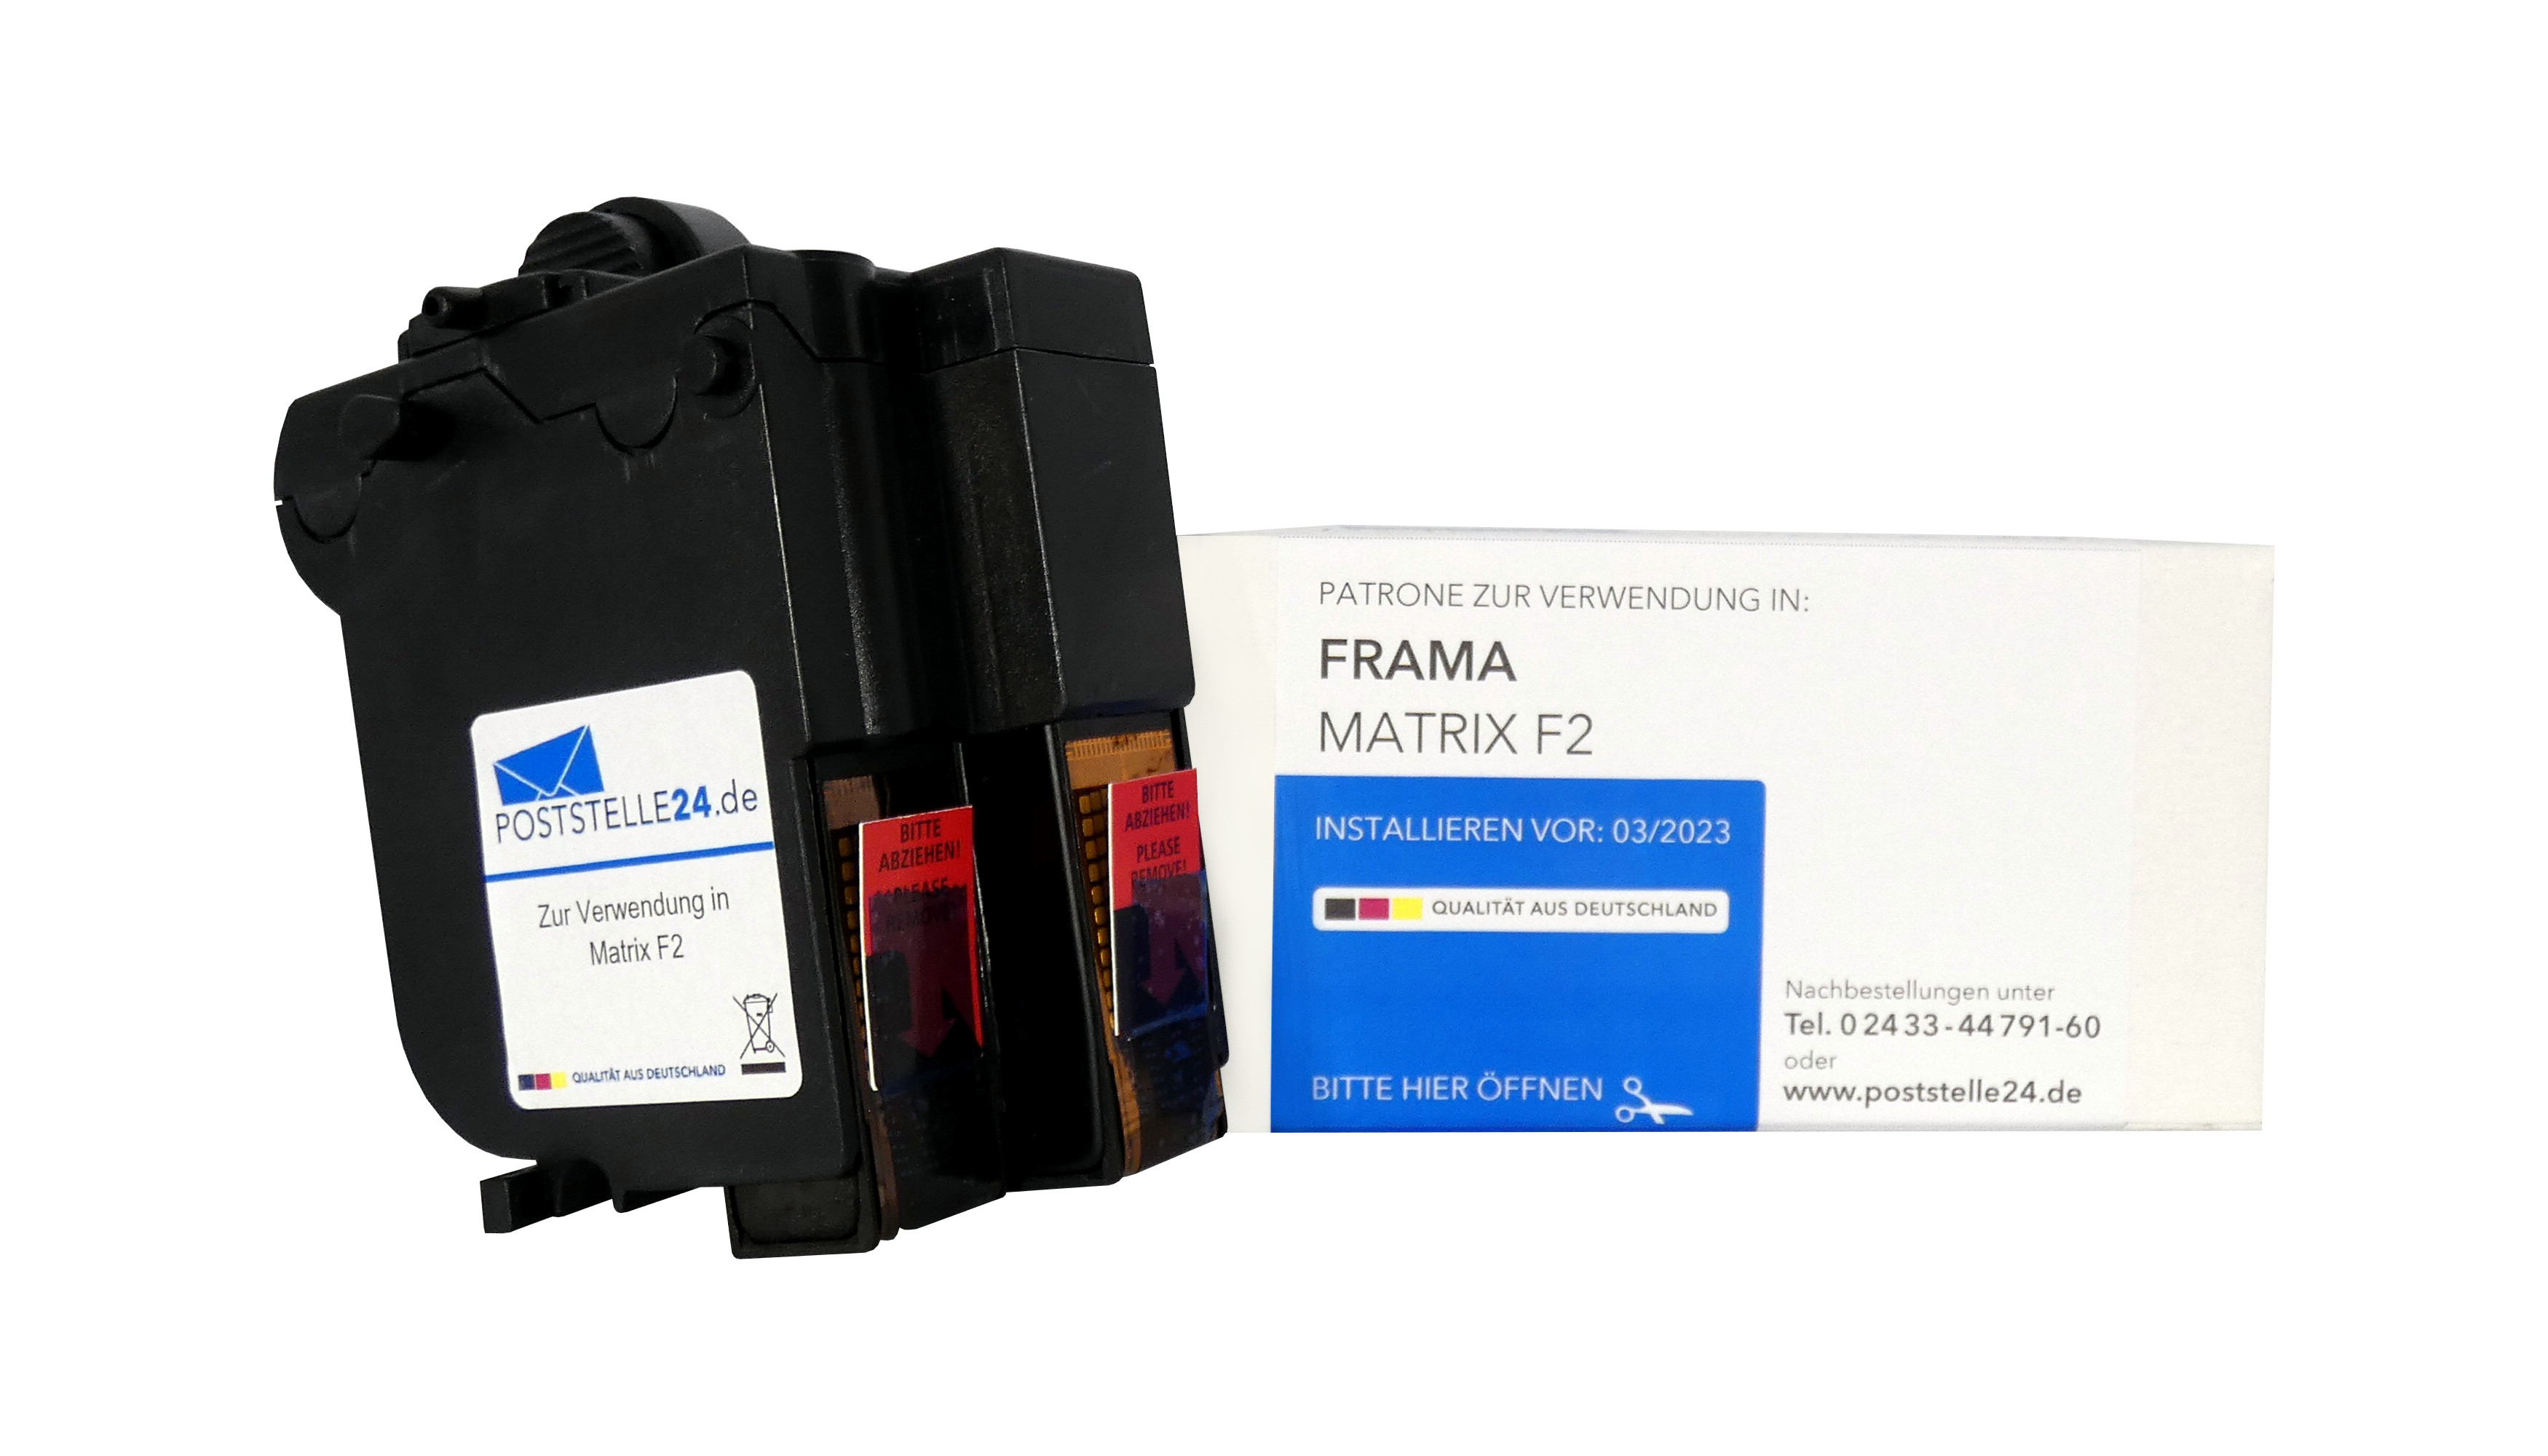 remanufactured cartridge for use in Frama Matrix F2